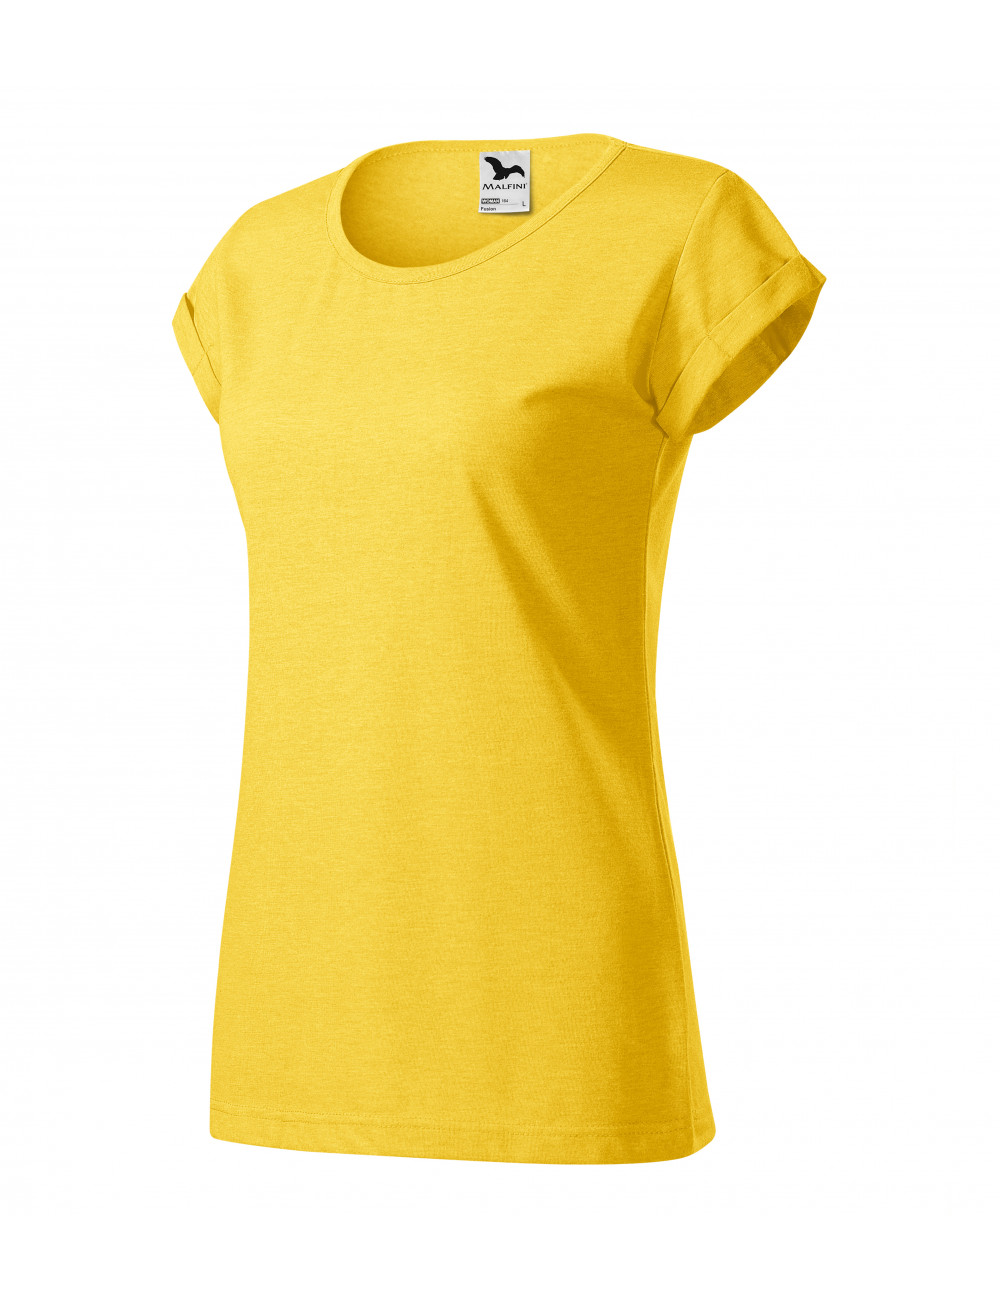 Women`s t-shirt fusion 164 yellow melange Adler Malfini